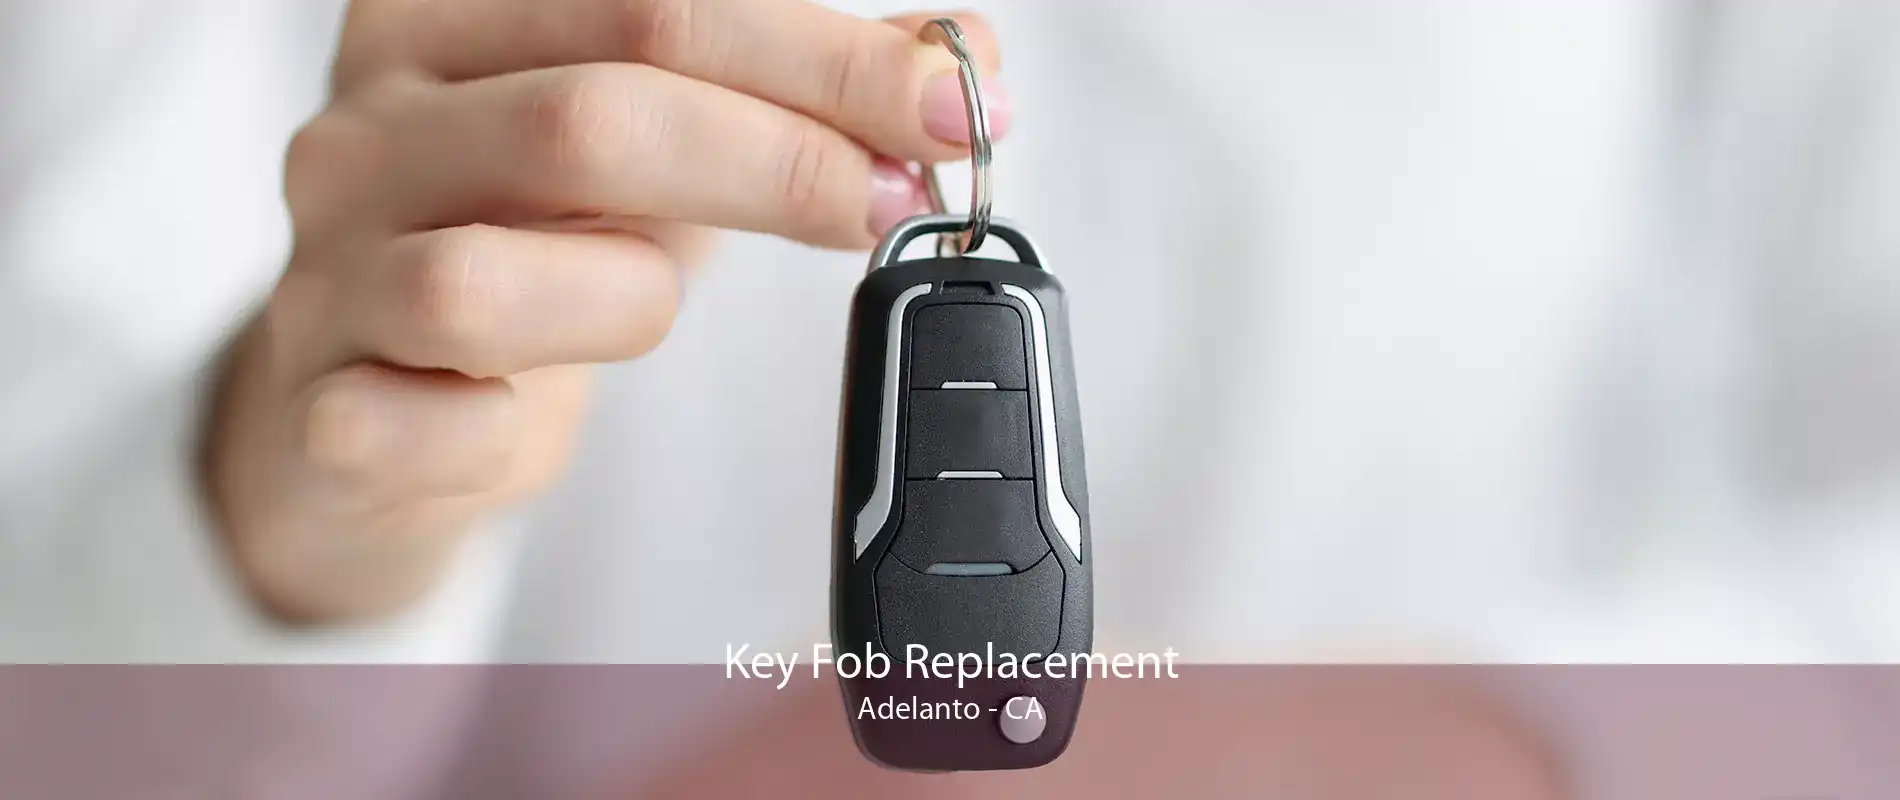 Key Fob Replacement Adelanto - CA